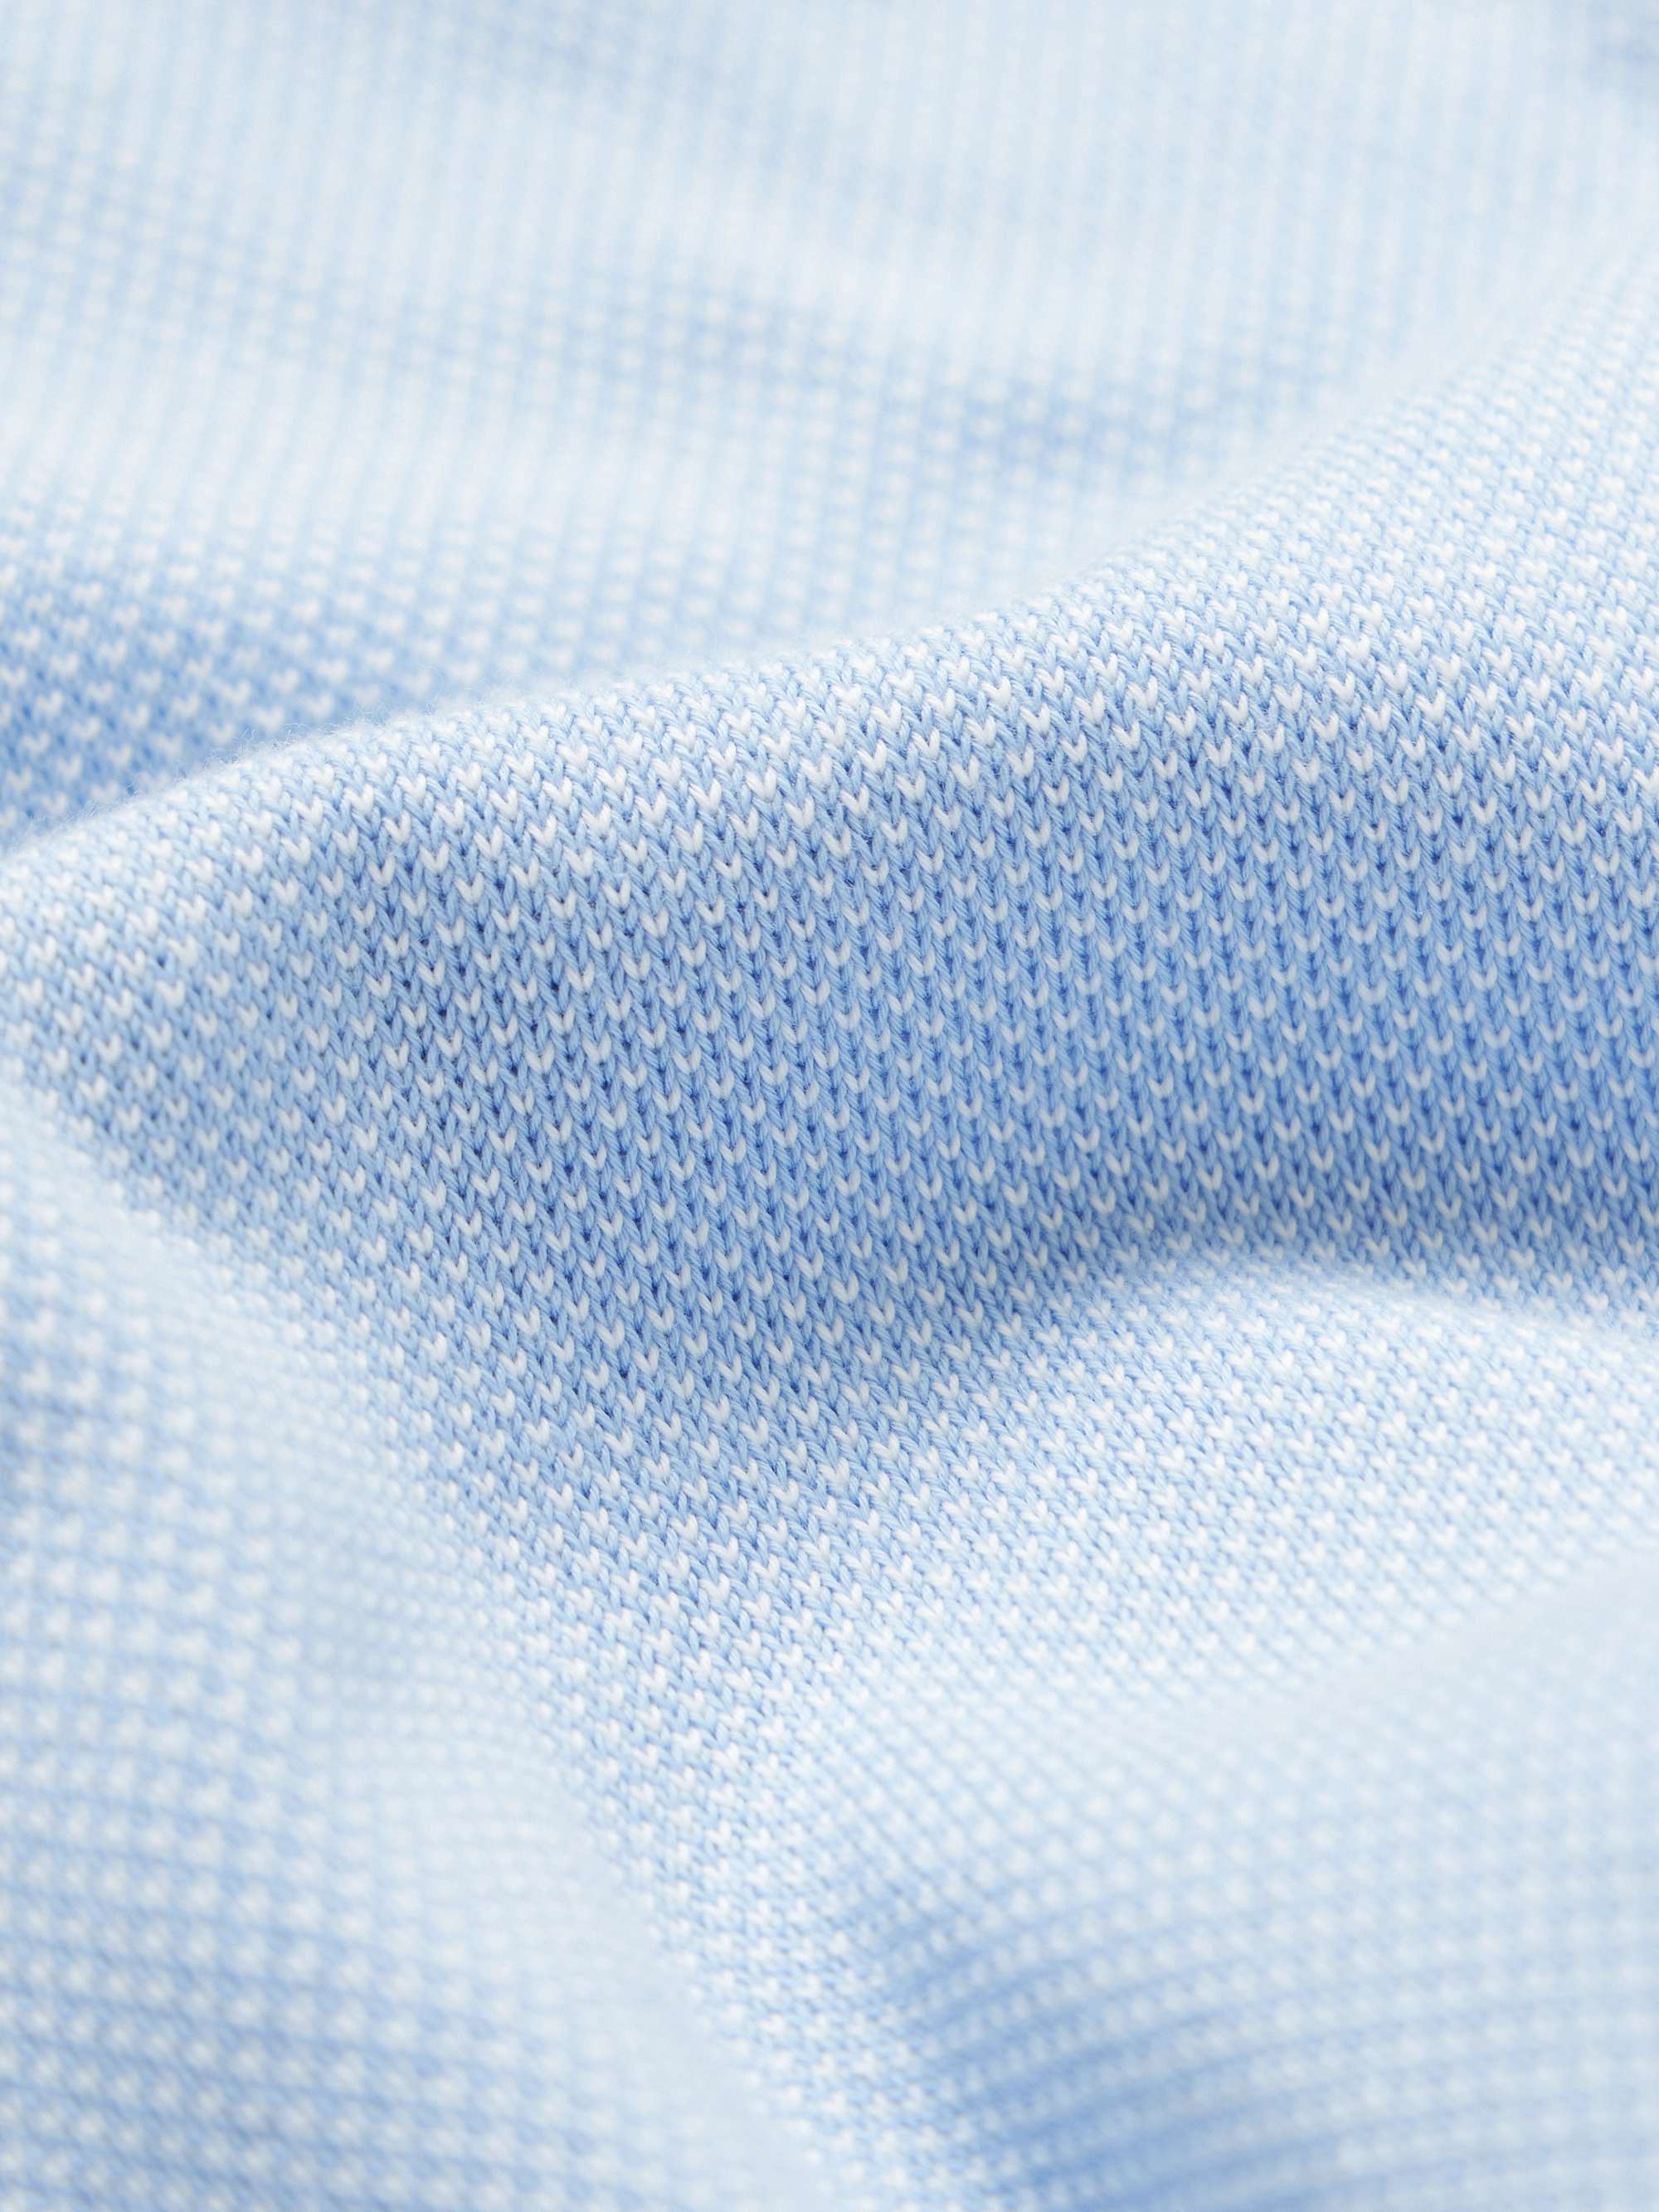 MR P. Honeycomb-Knit Cotton Polo Shirt